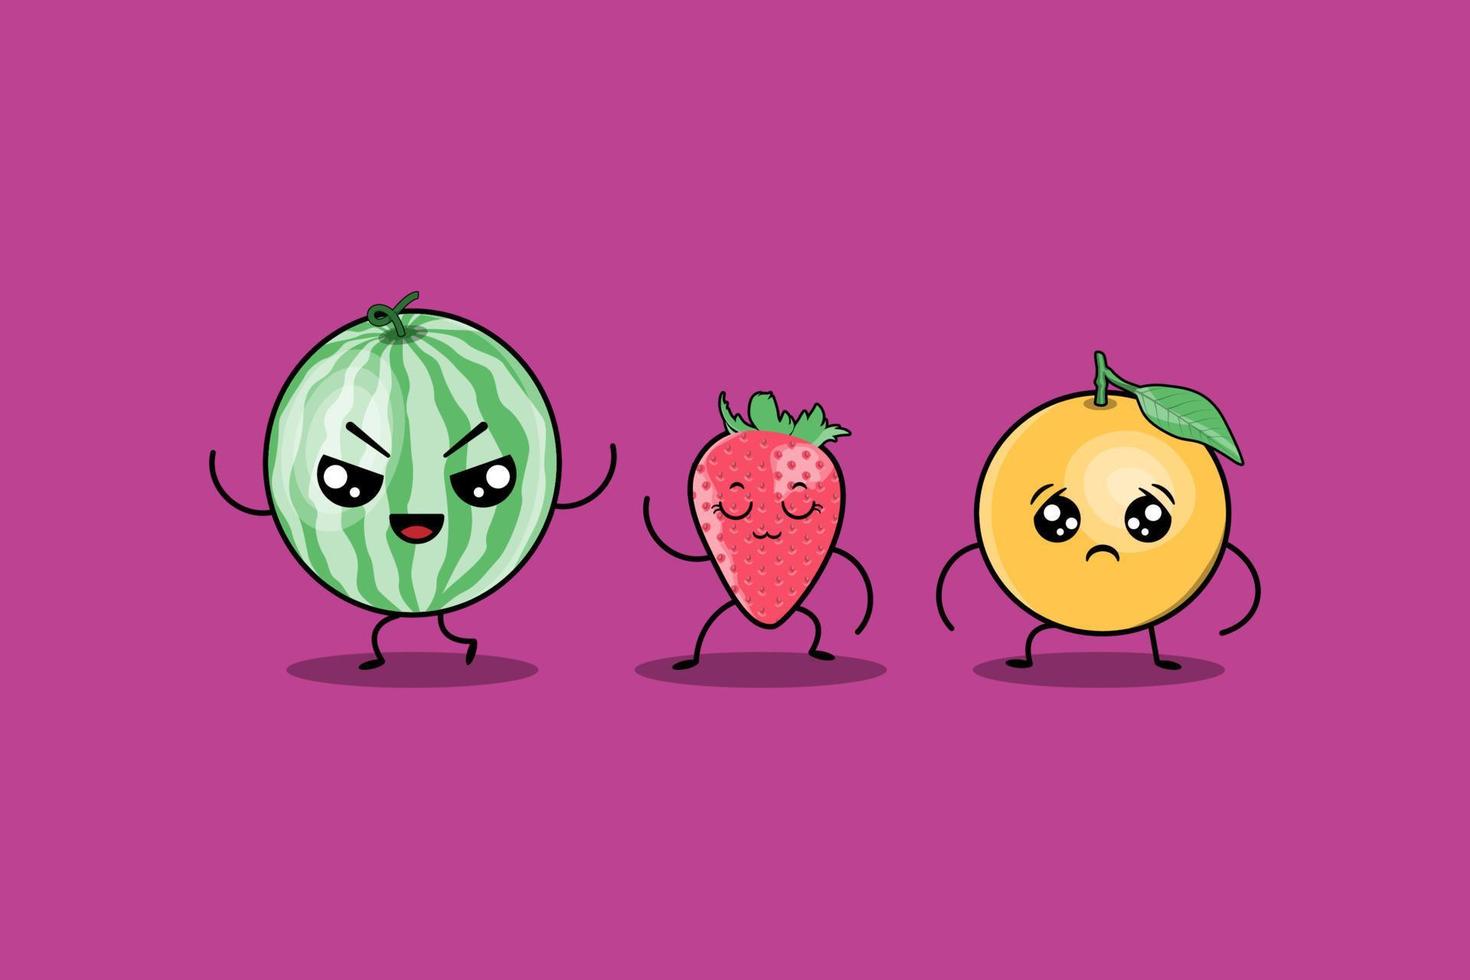 vecteur de personnages de dessins animés de fruits kawaii coloré mignon serti de nombreuses expressions